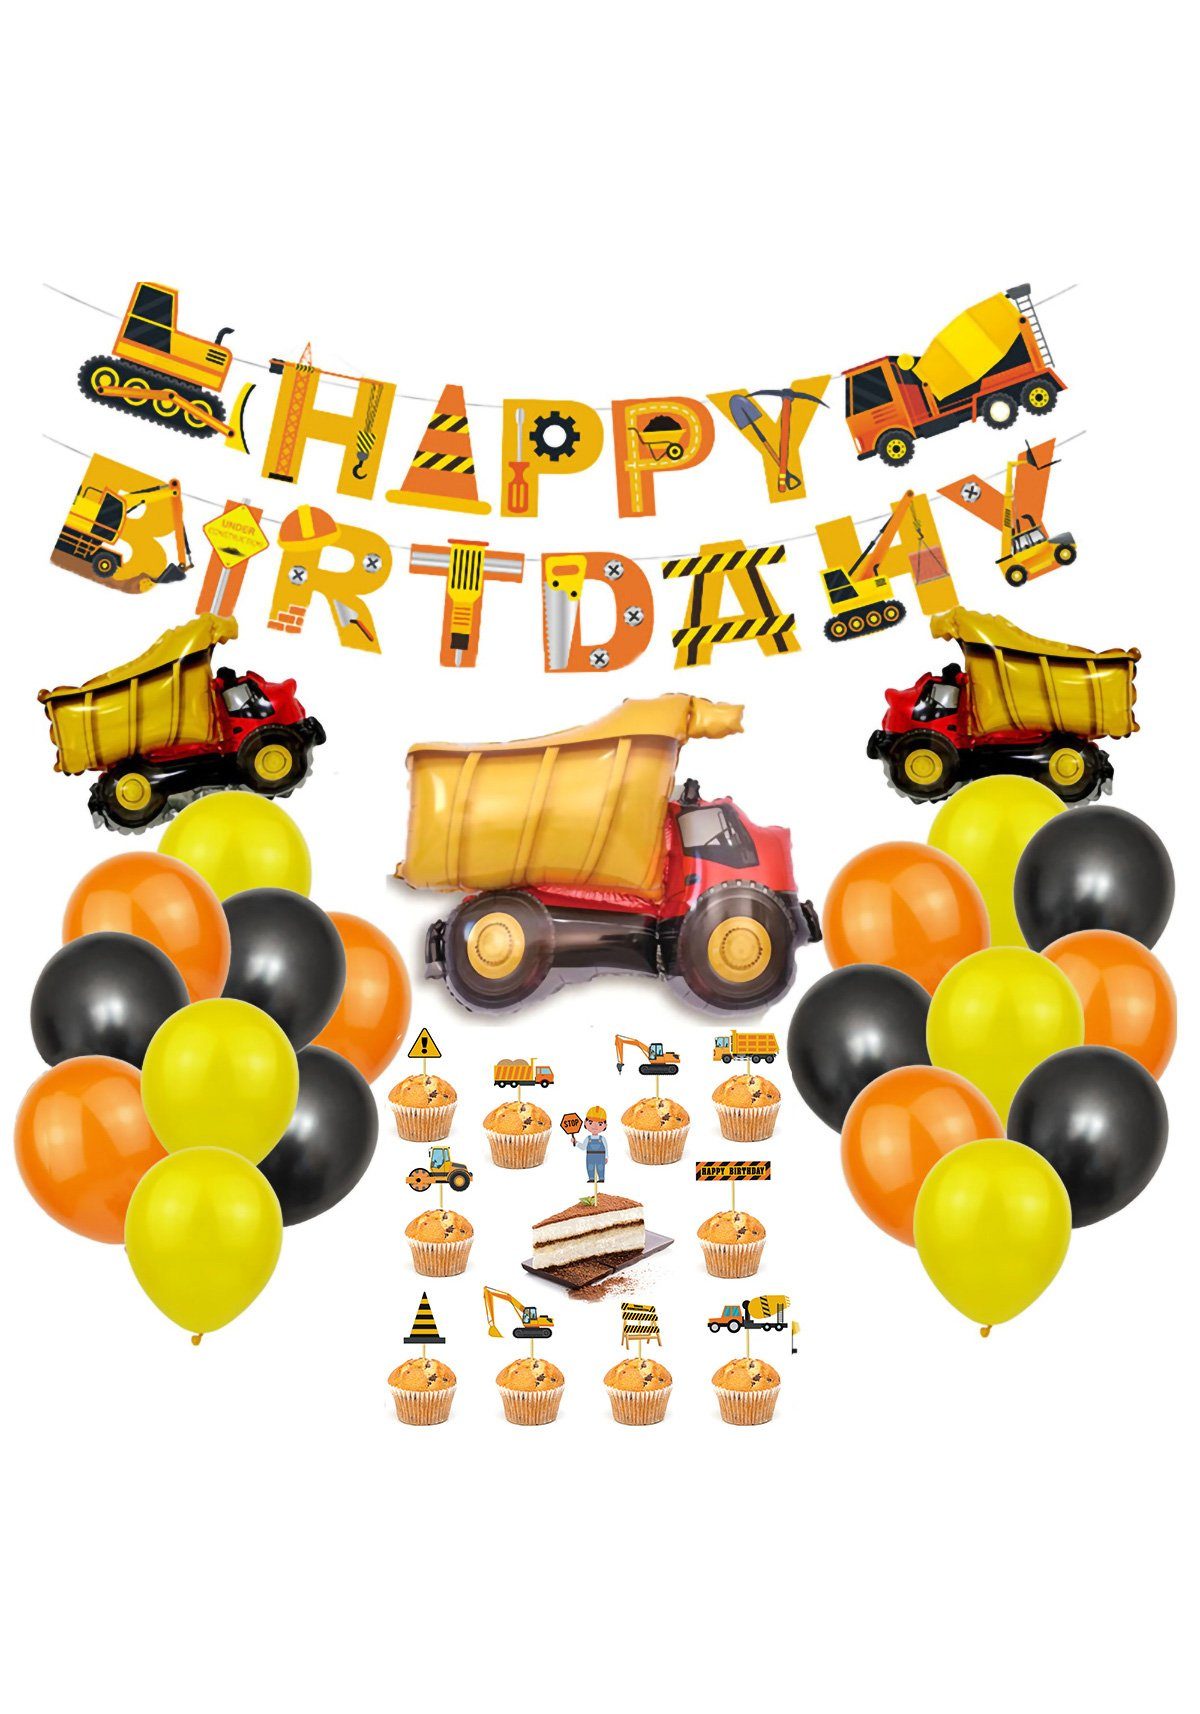 Minecraft Partydeko set Luftballons Tortendeko Geburtstag Girlande